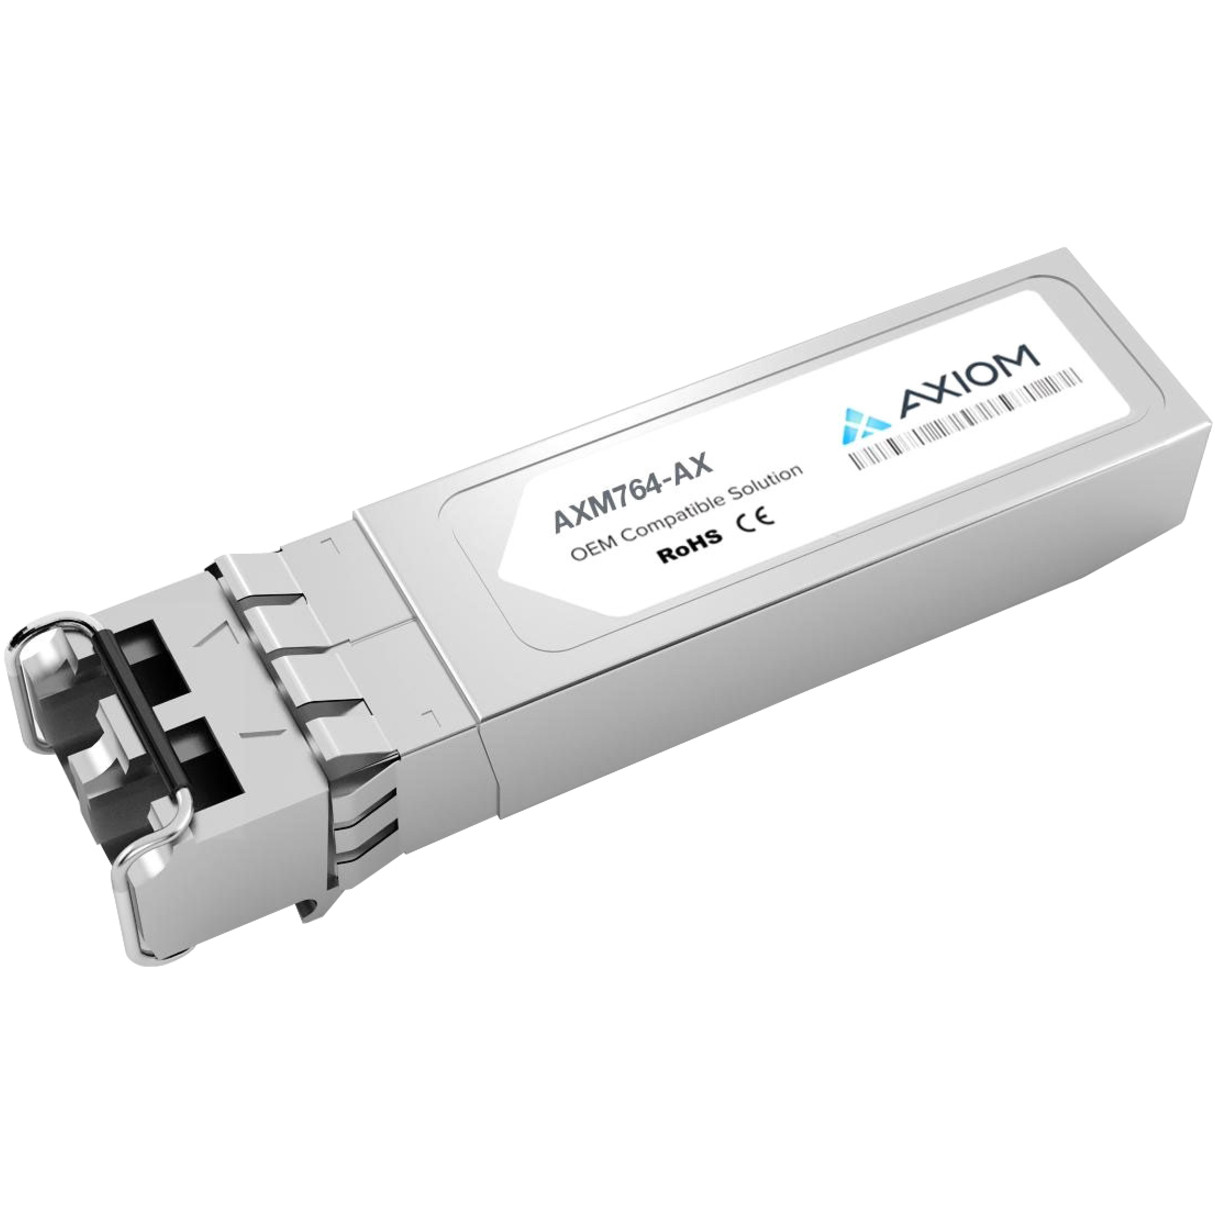 Axiom Memory Solutions 10GBASE-LR Lite SFP+ Transceiver for NetgearAXM764100% Netgear Compatible 10GBASE-LR Lite SFP+ AXM764-AX